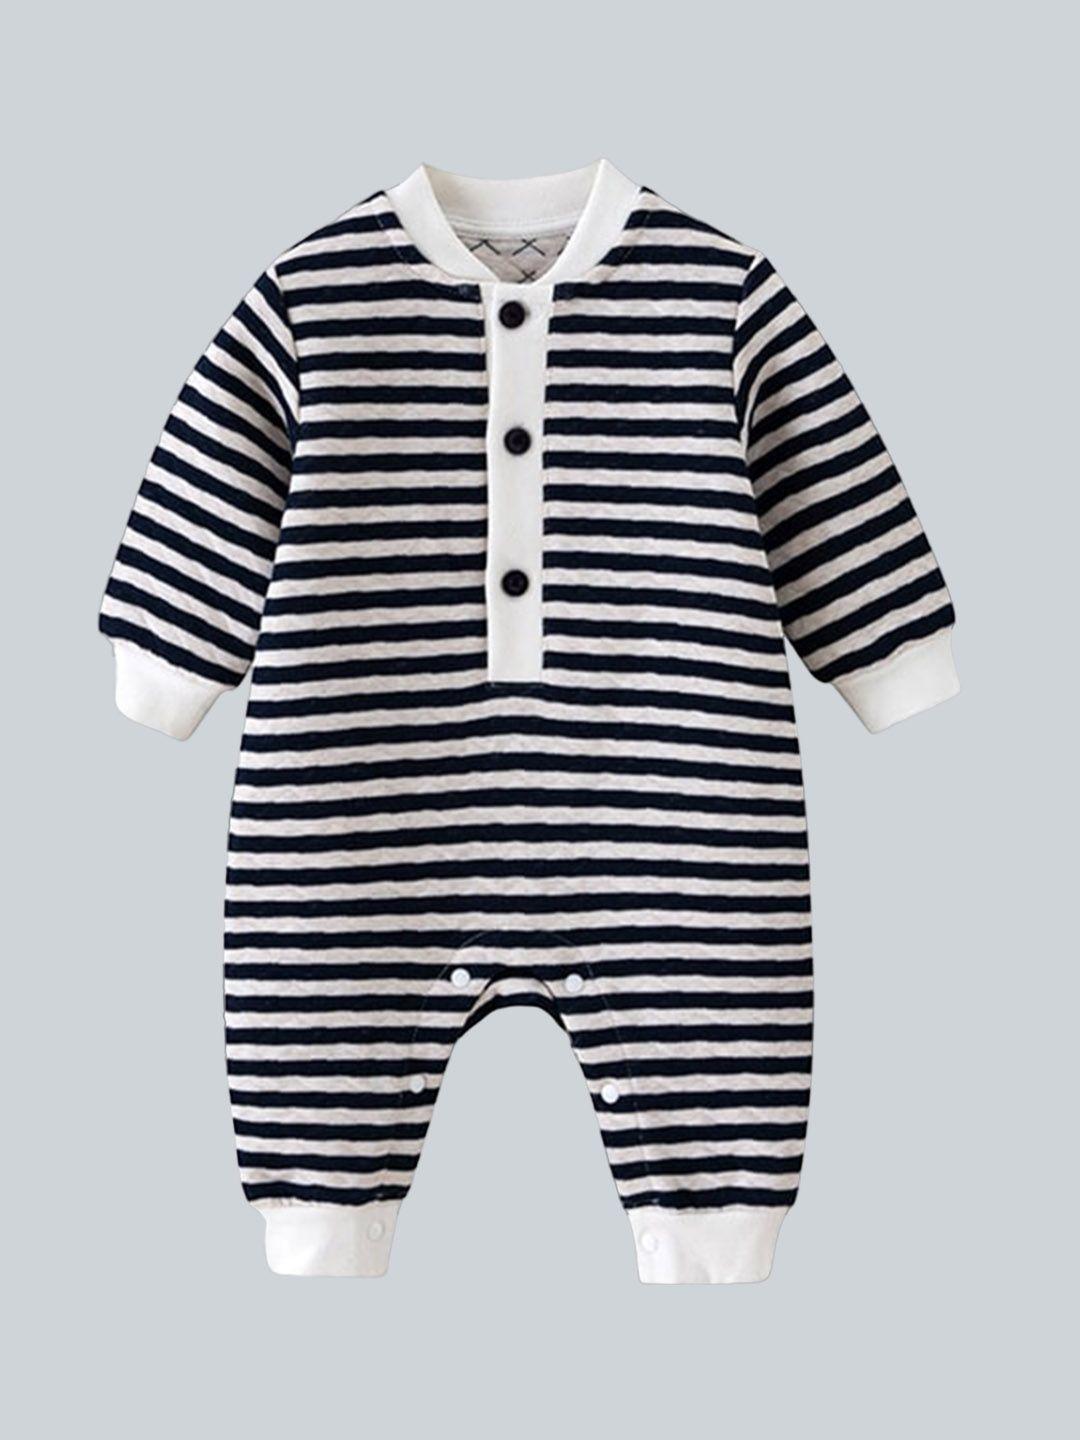 stylecast infants boys navy blue striped cotton rompers